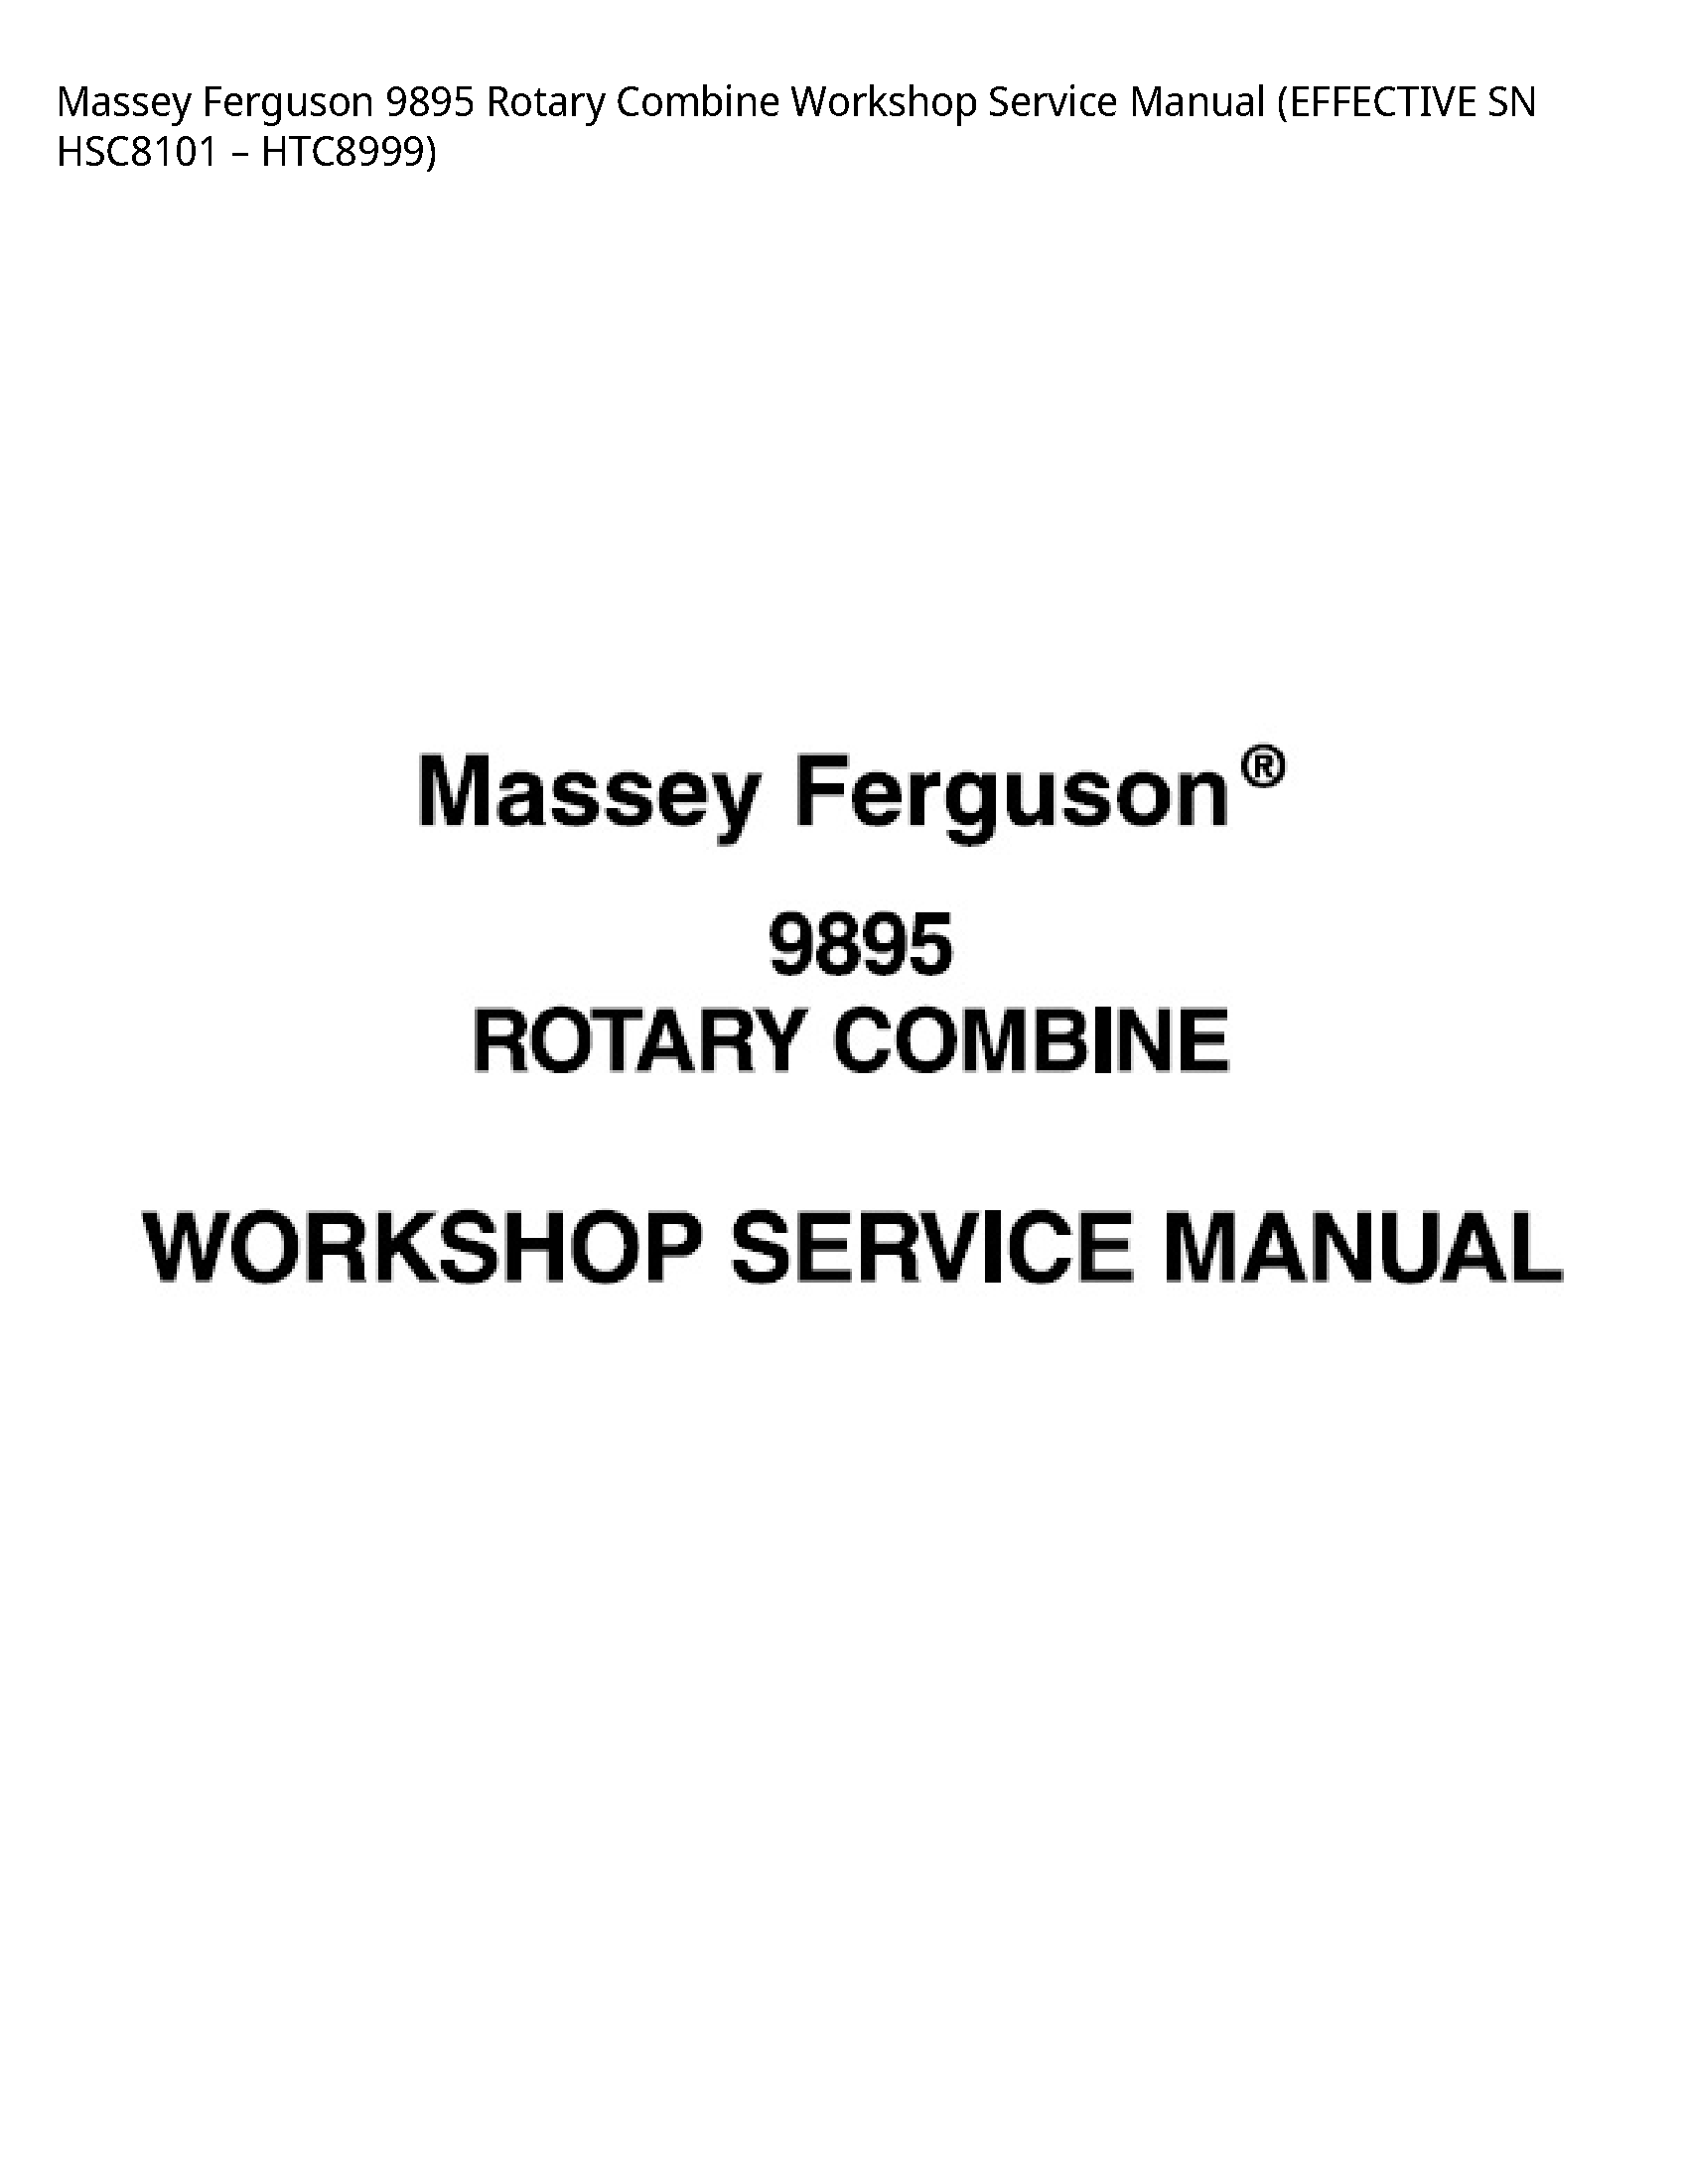 Massey Ferguson 9895 Rotary Combine Service manual